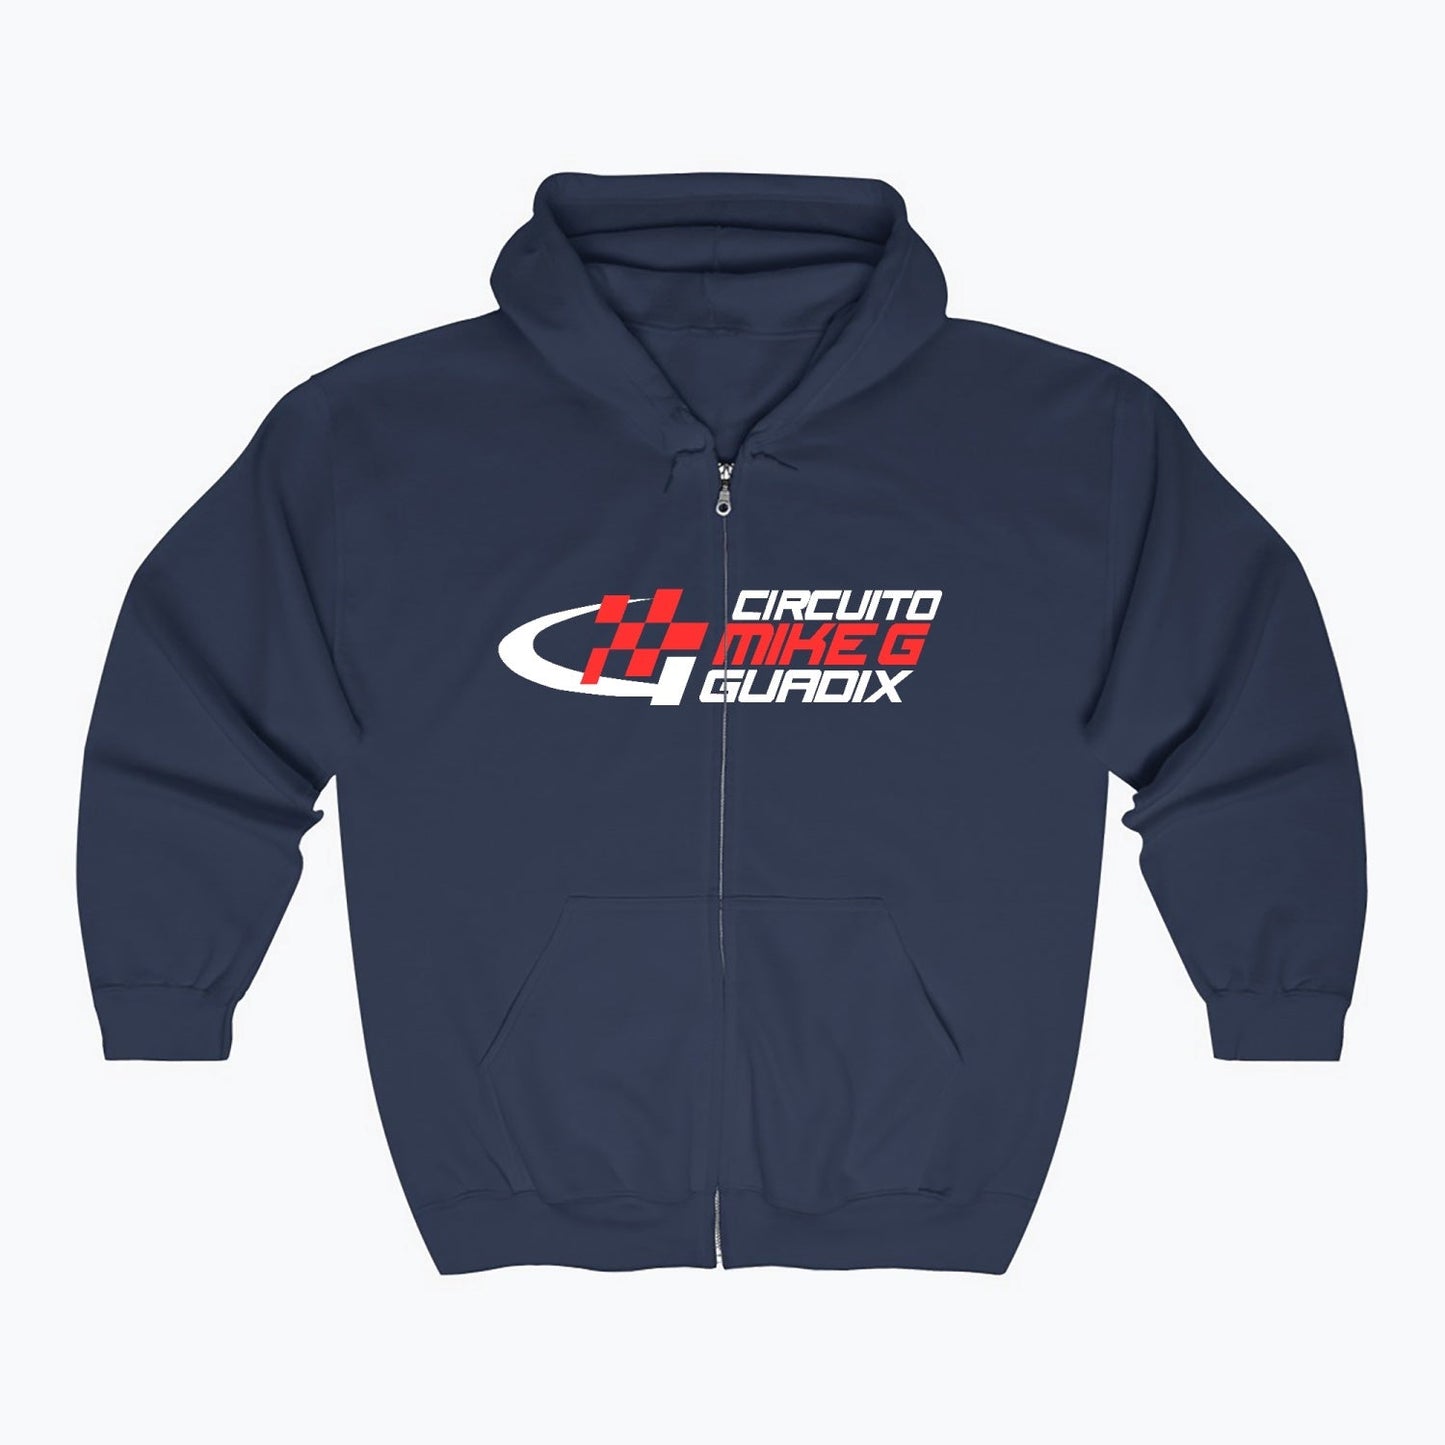 CIRCUITO MIKE G GUADIX Full Zip Hooded Sweatshirt - Navy